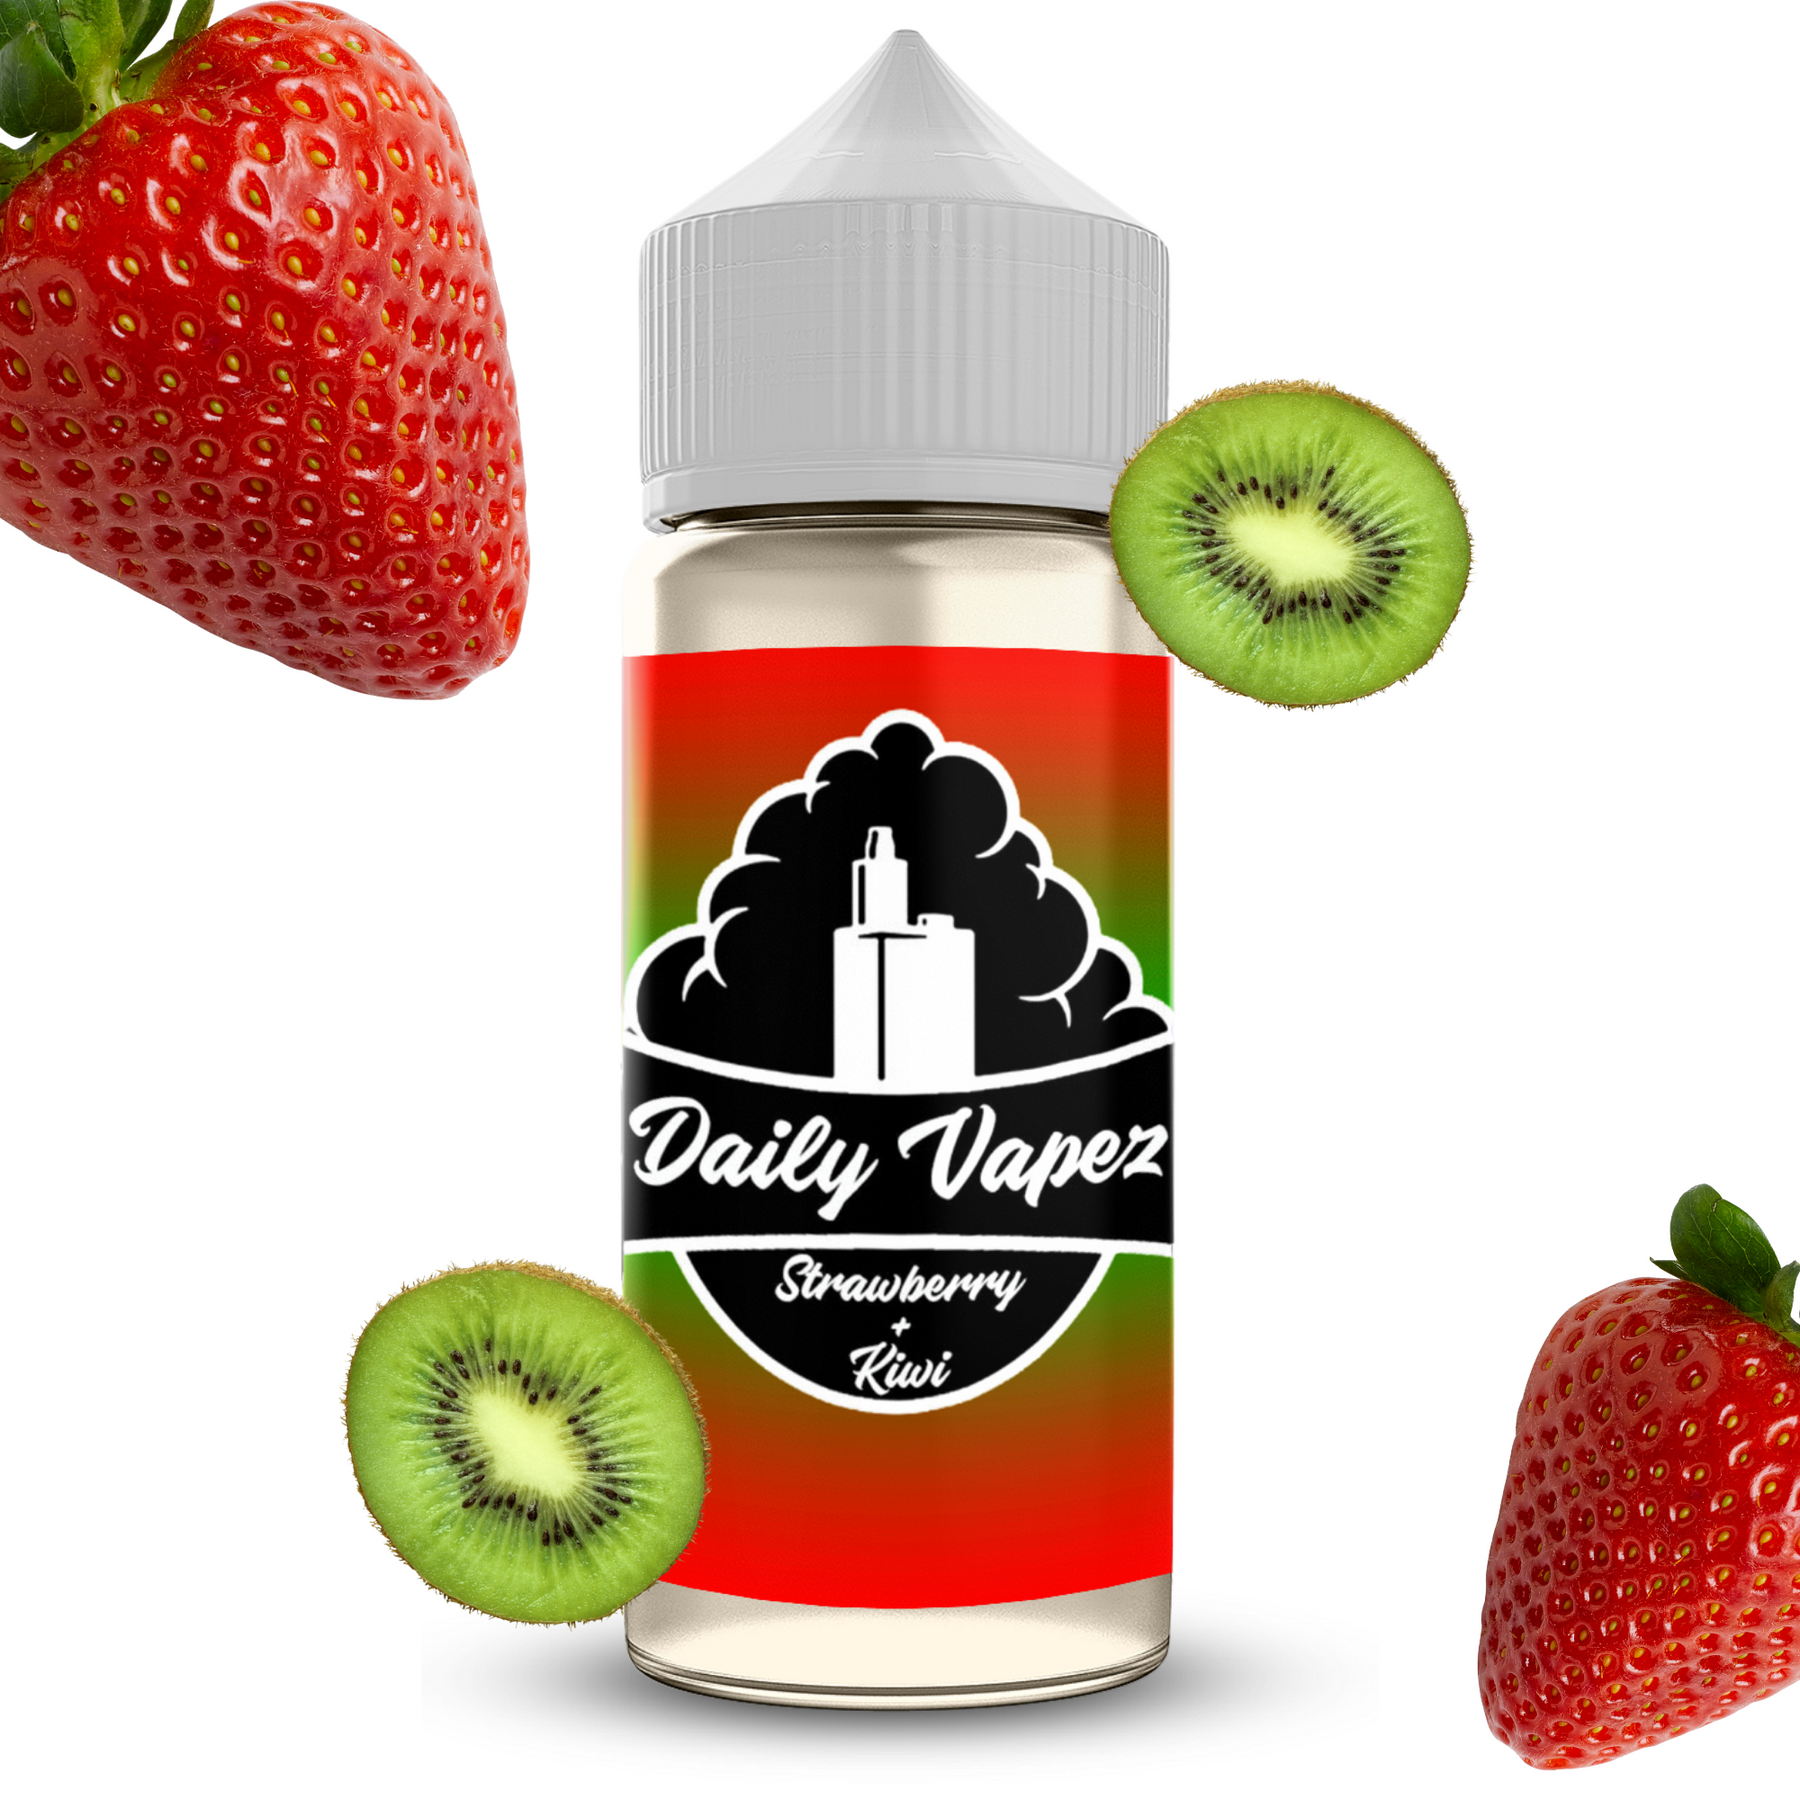 Daily Vapez - Strawberry & Kiwi 100ML